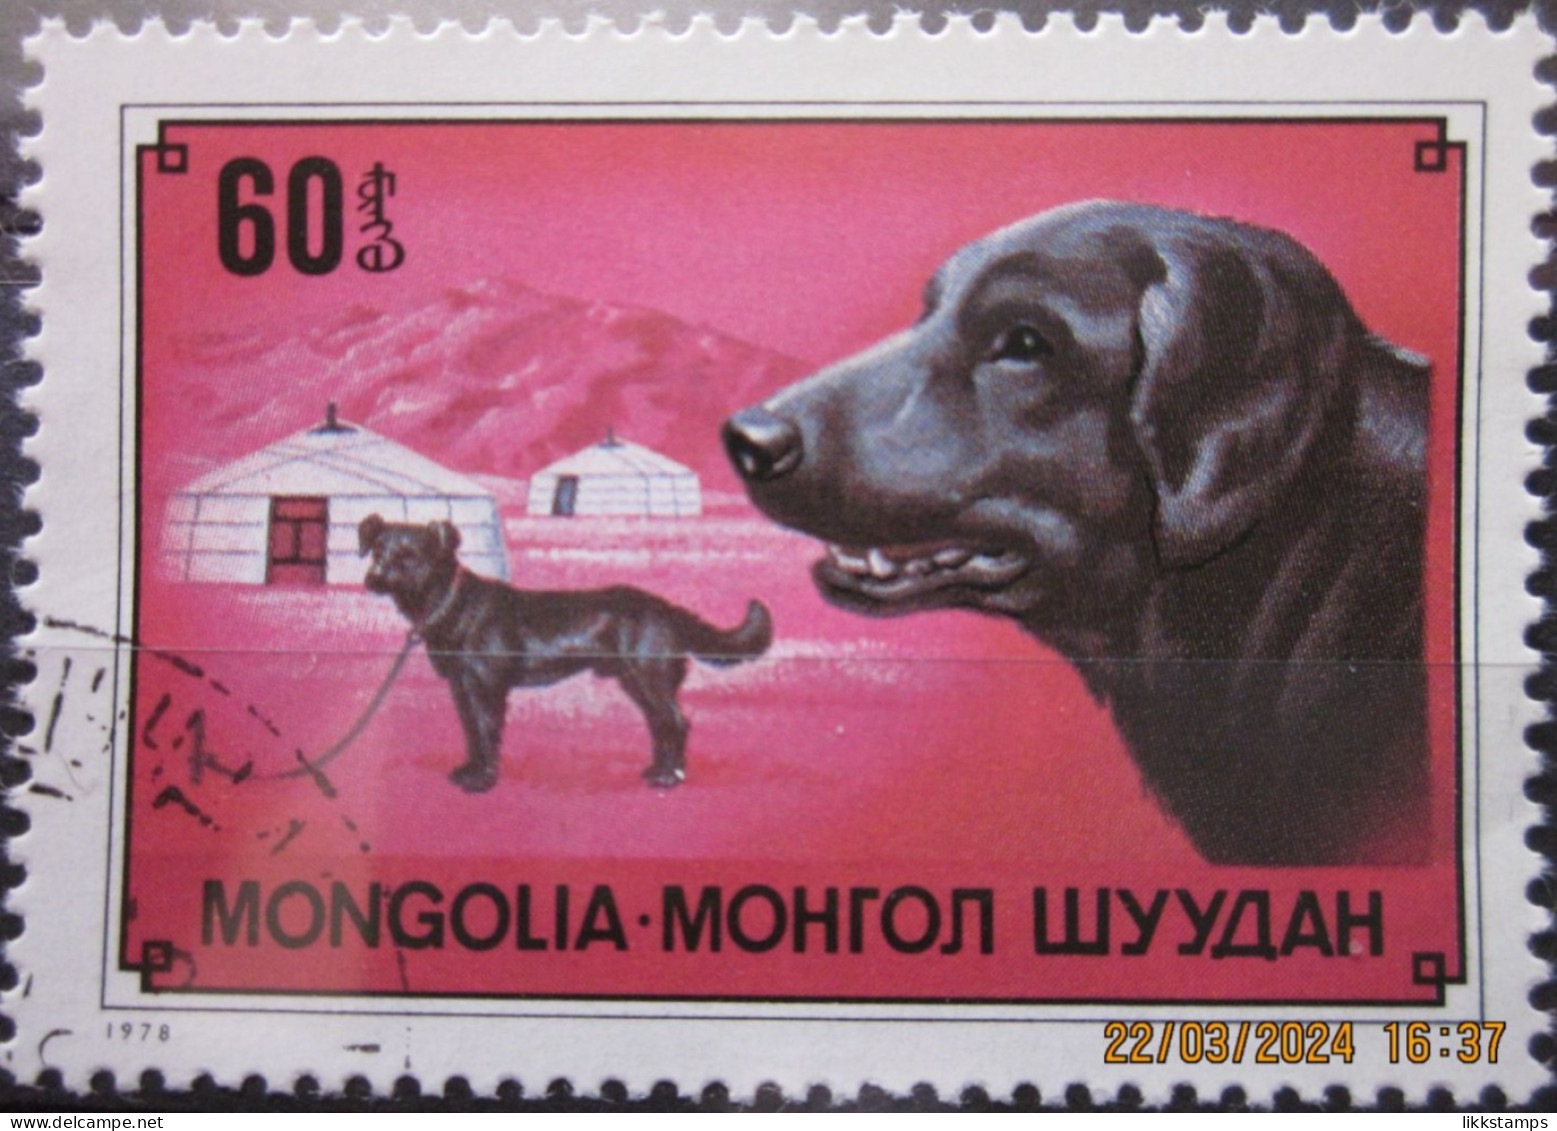 MONGOLIA ~ 1978 ~ S.G. NUMBERS 1157, ~ DOGS. ~ VFU #03479 - Mongolia